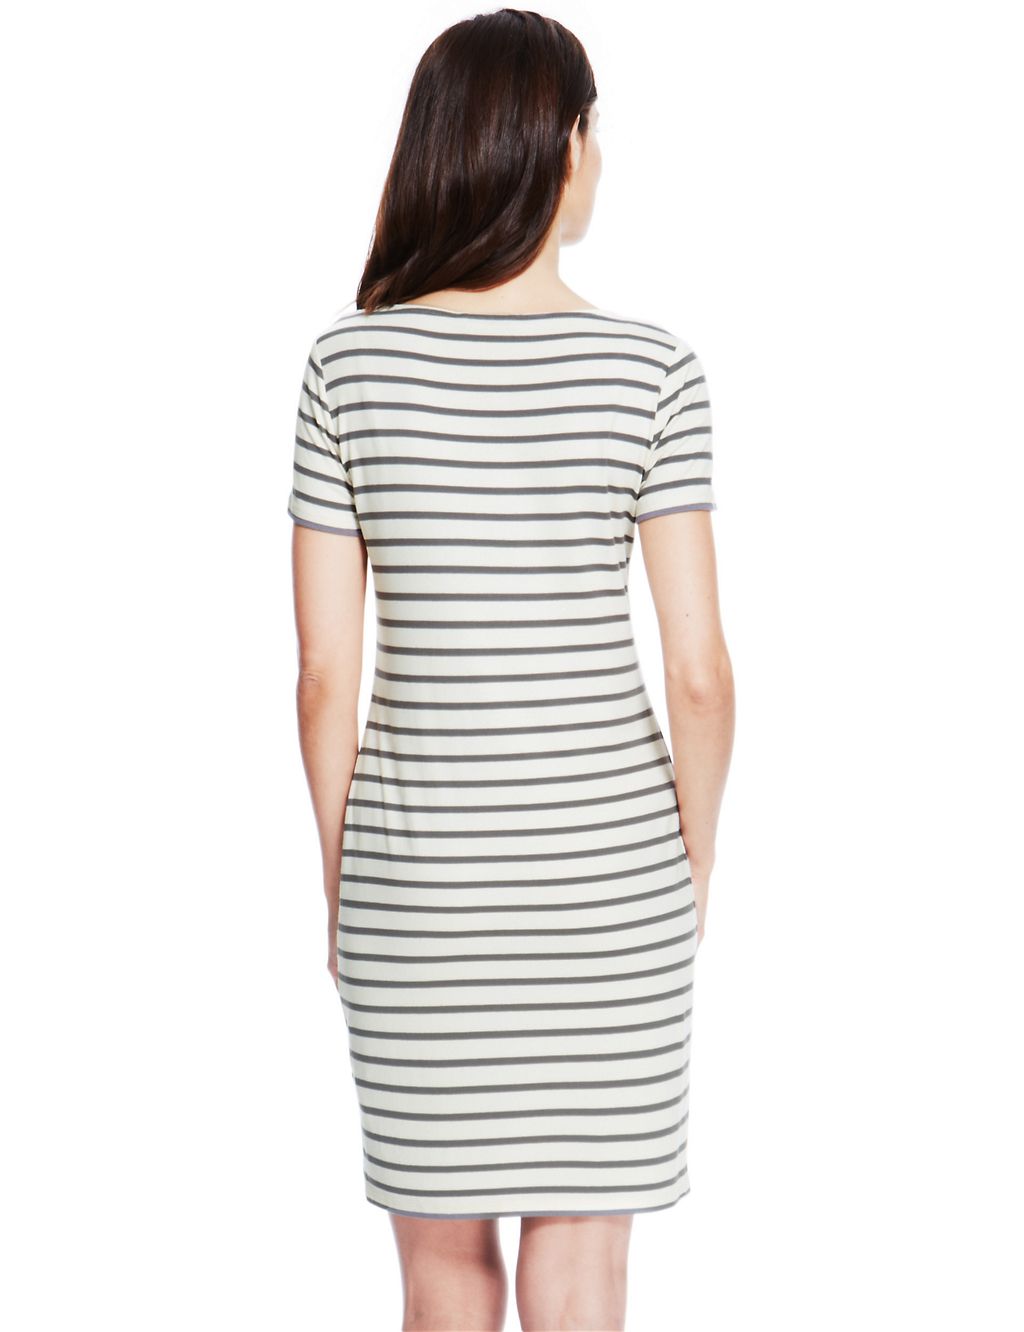 Jewel Neckline Striped T-Shirt Dress 5 of 5